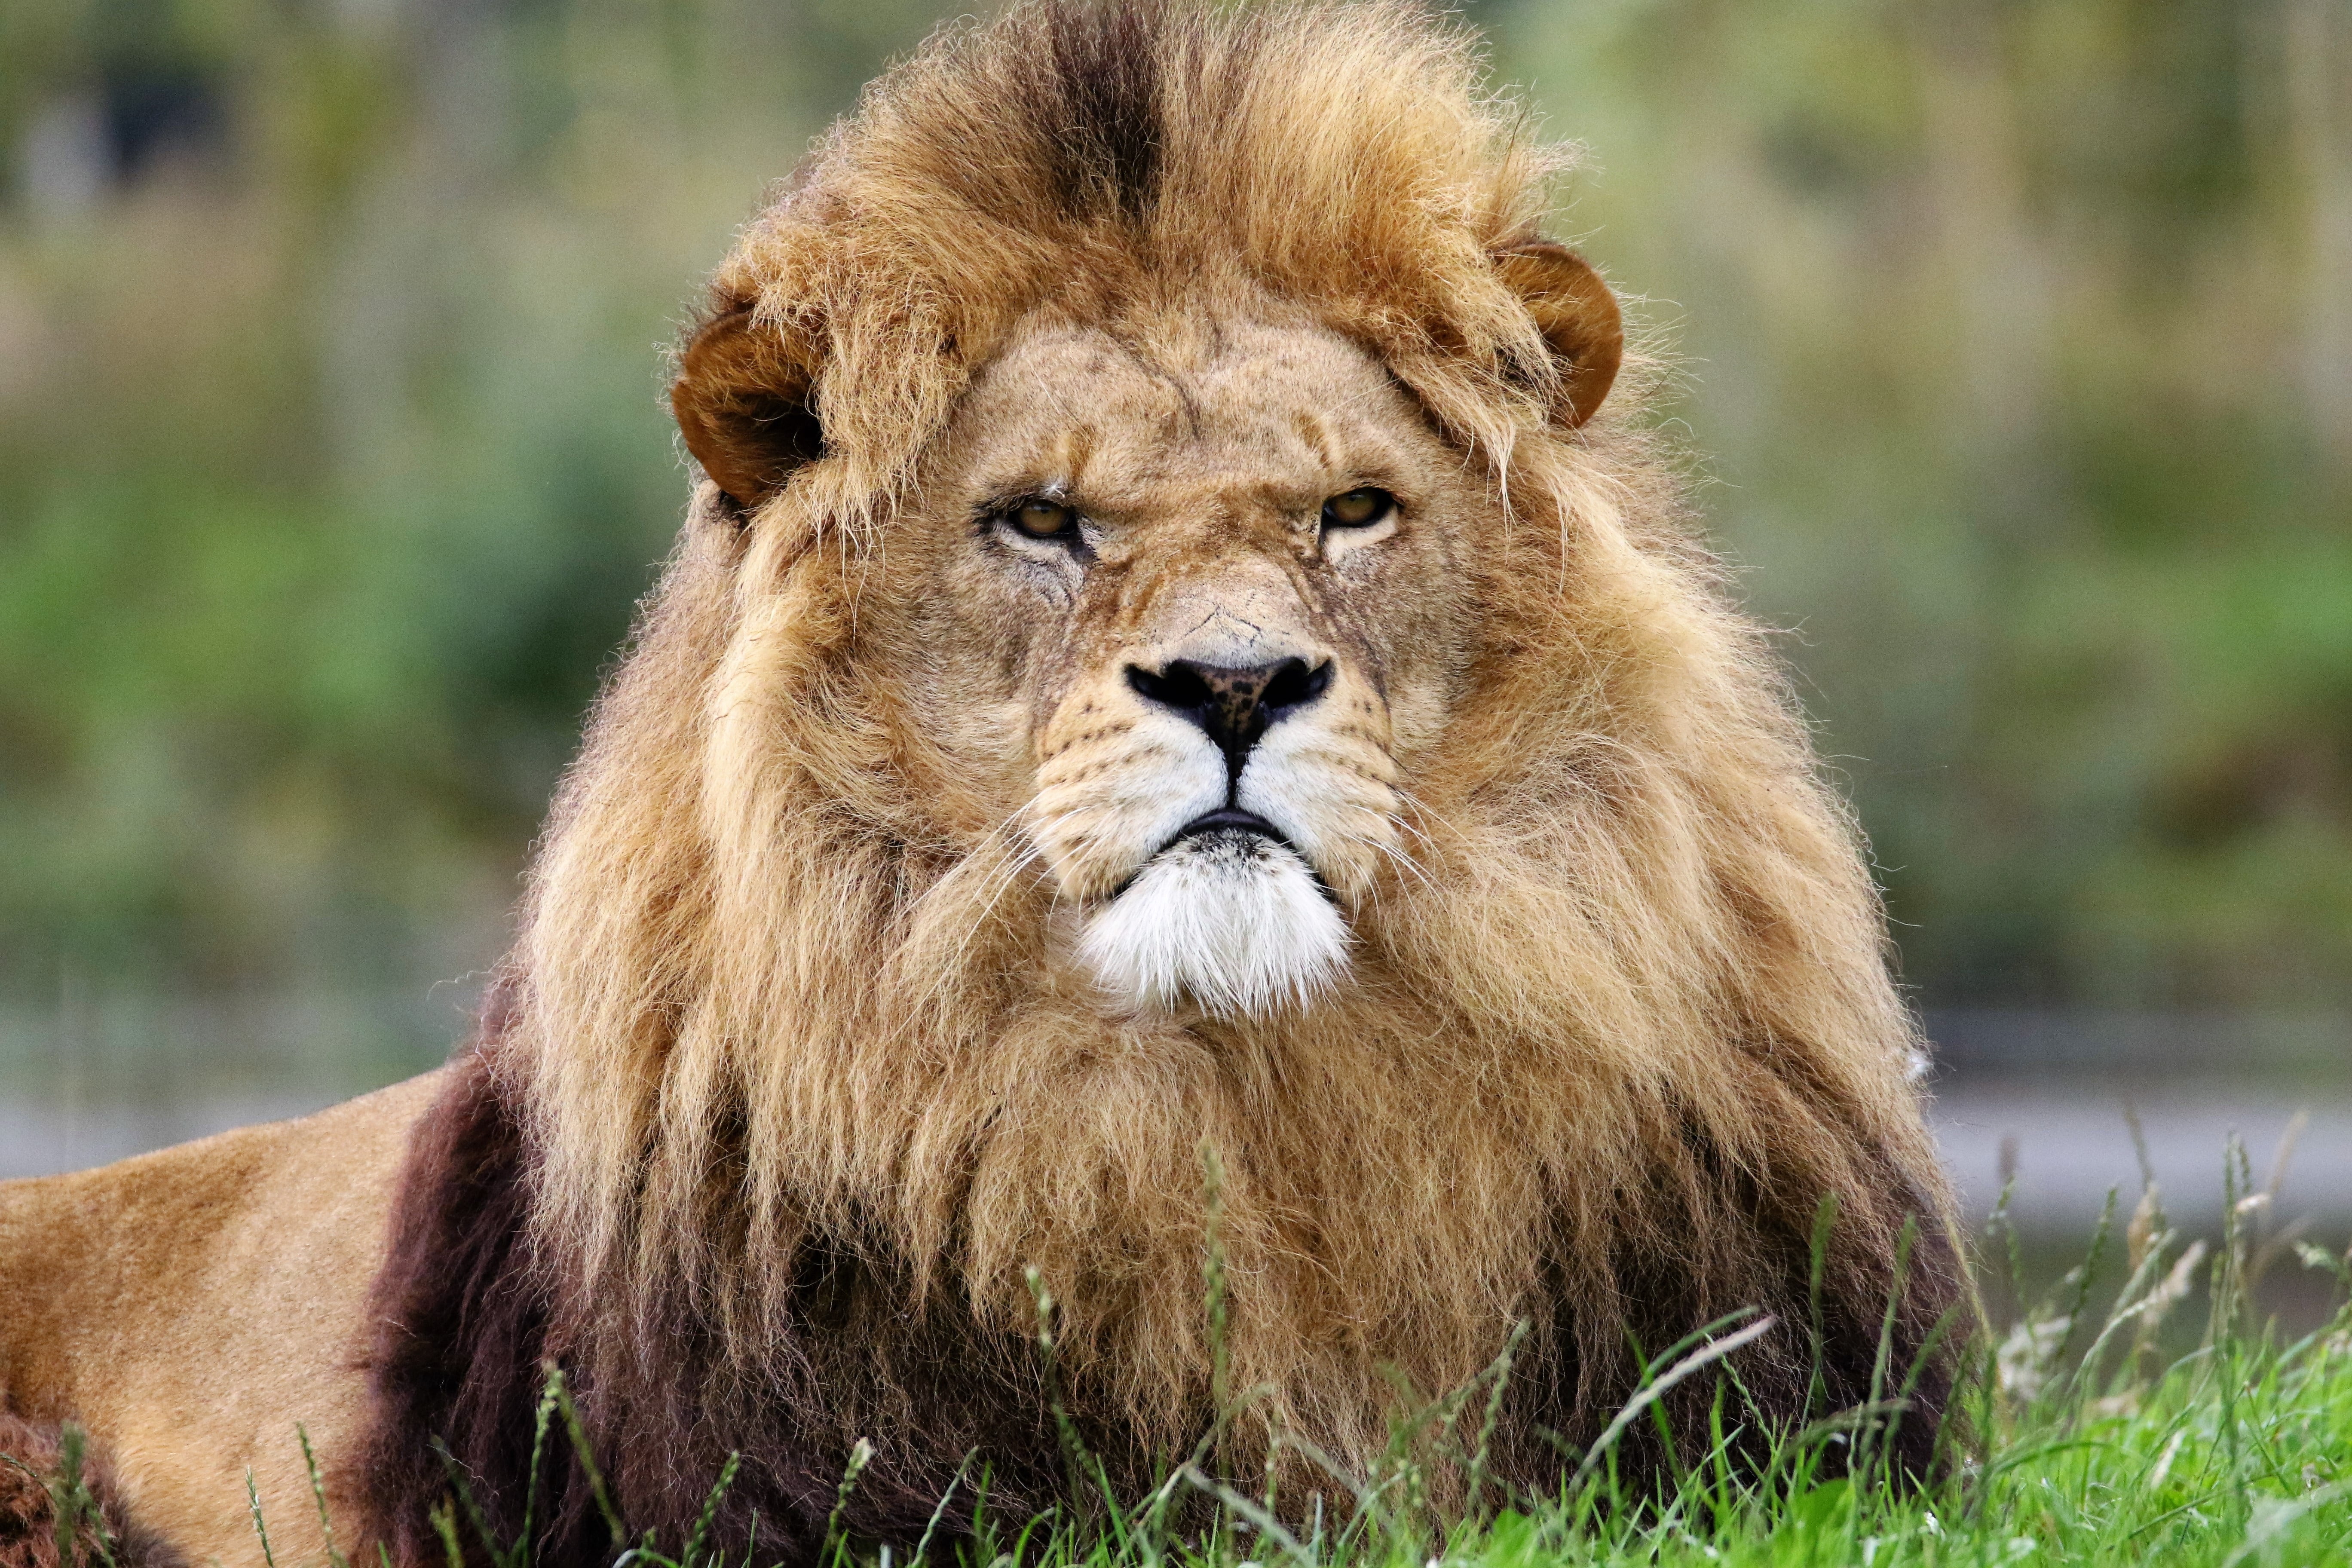 lion lying on grass at daytime photo, king, animal, cat, feline